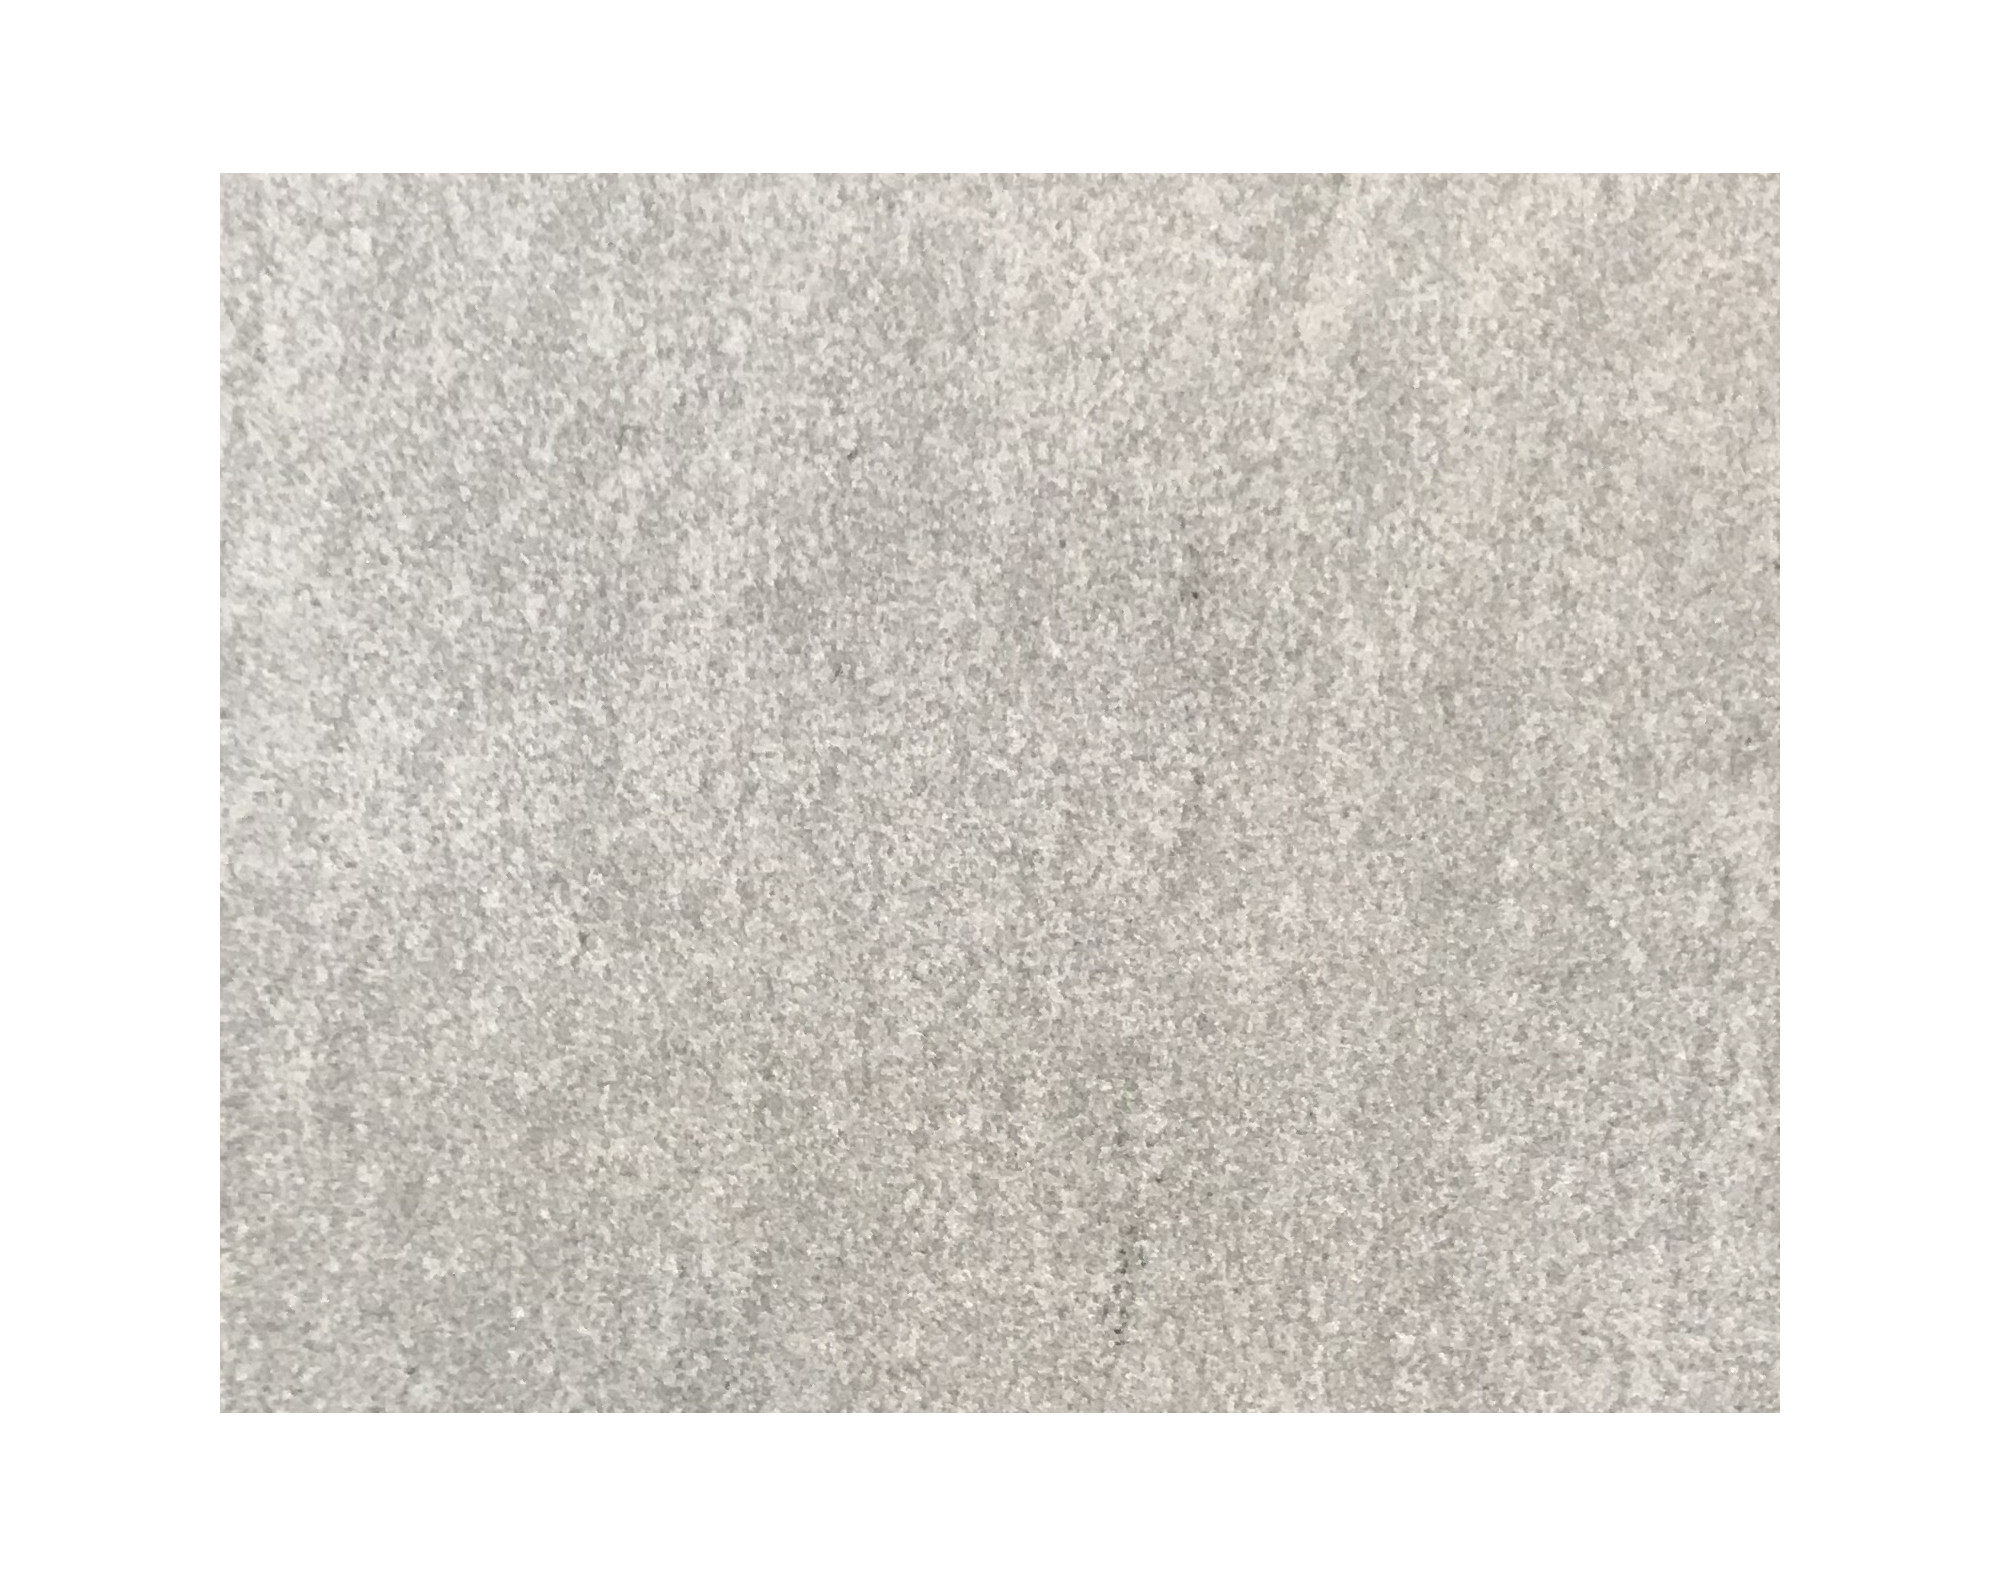 Harmo roc firenzeset, keramiek-serie, ovaal d: 6,00mx11,30m, zand grijs, keramisch porselein